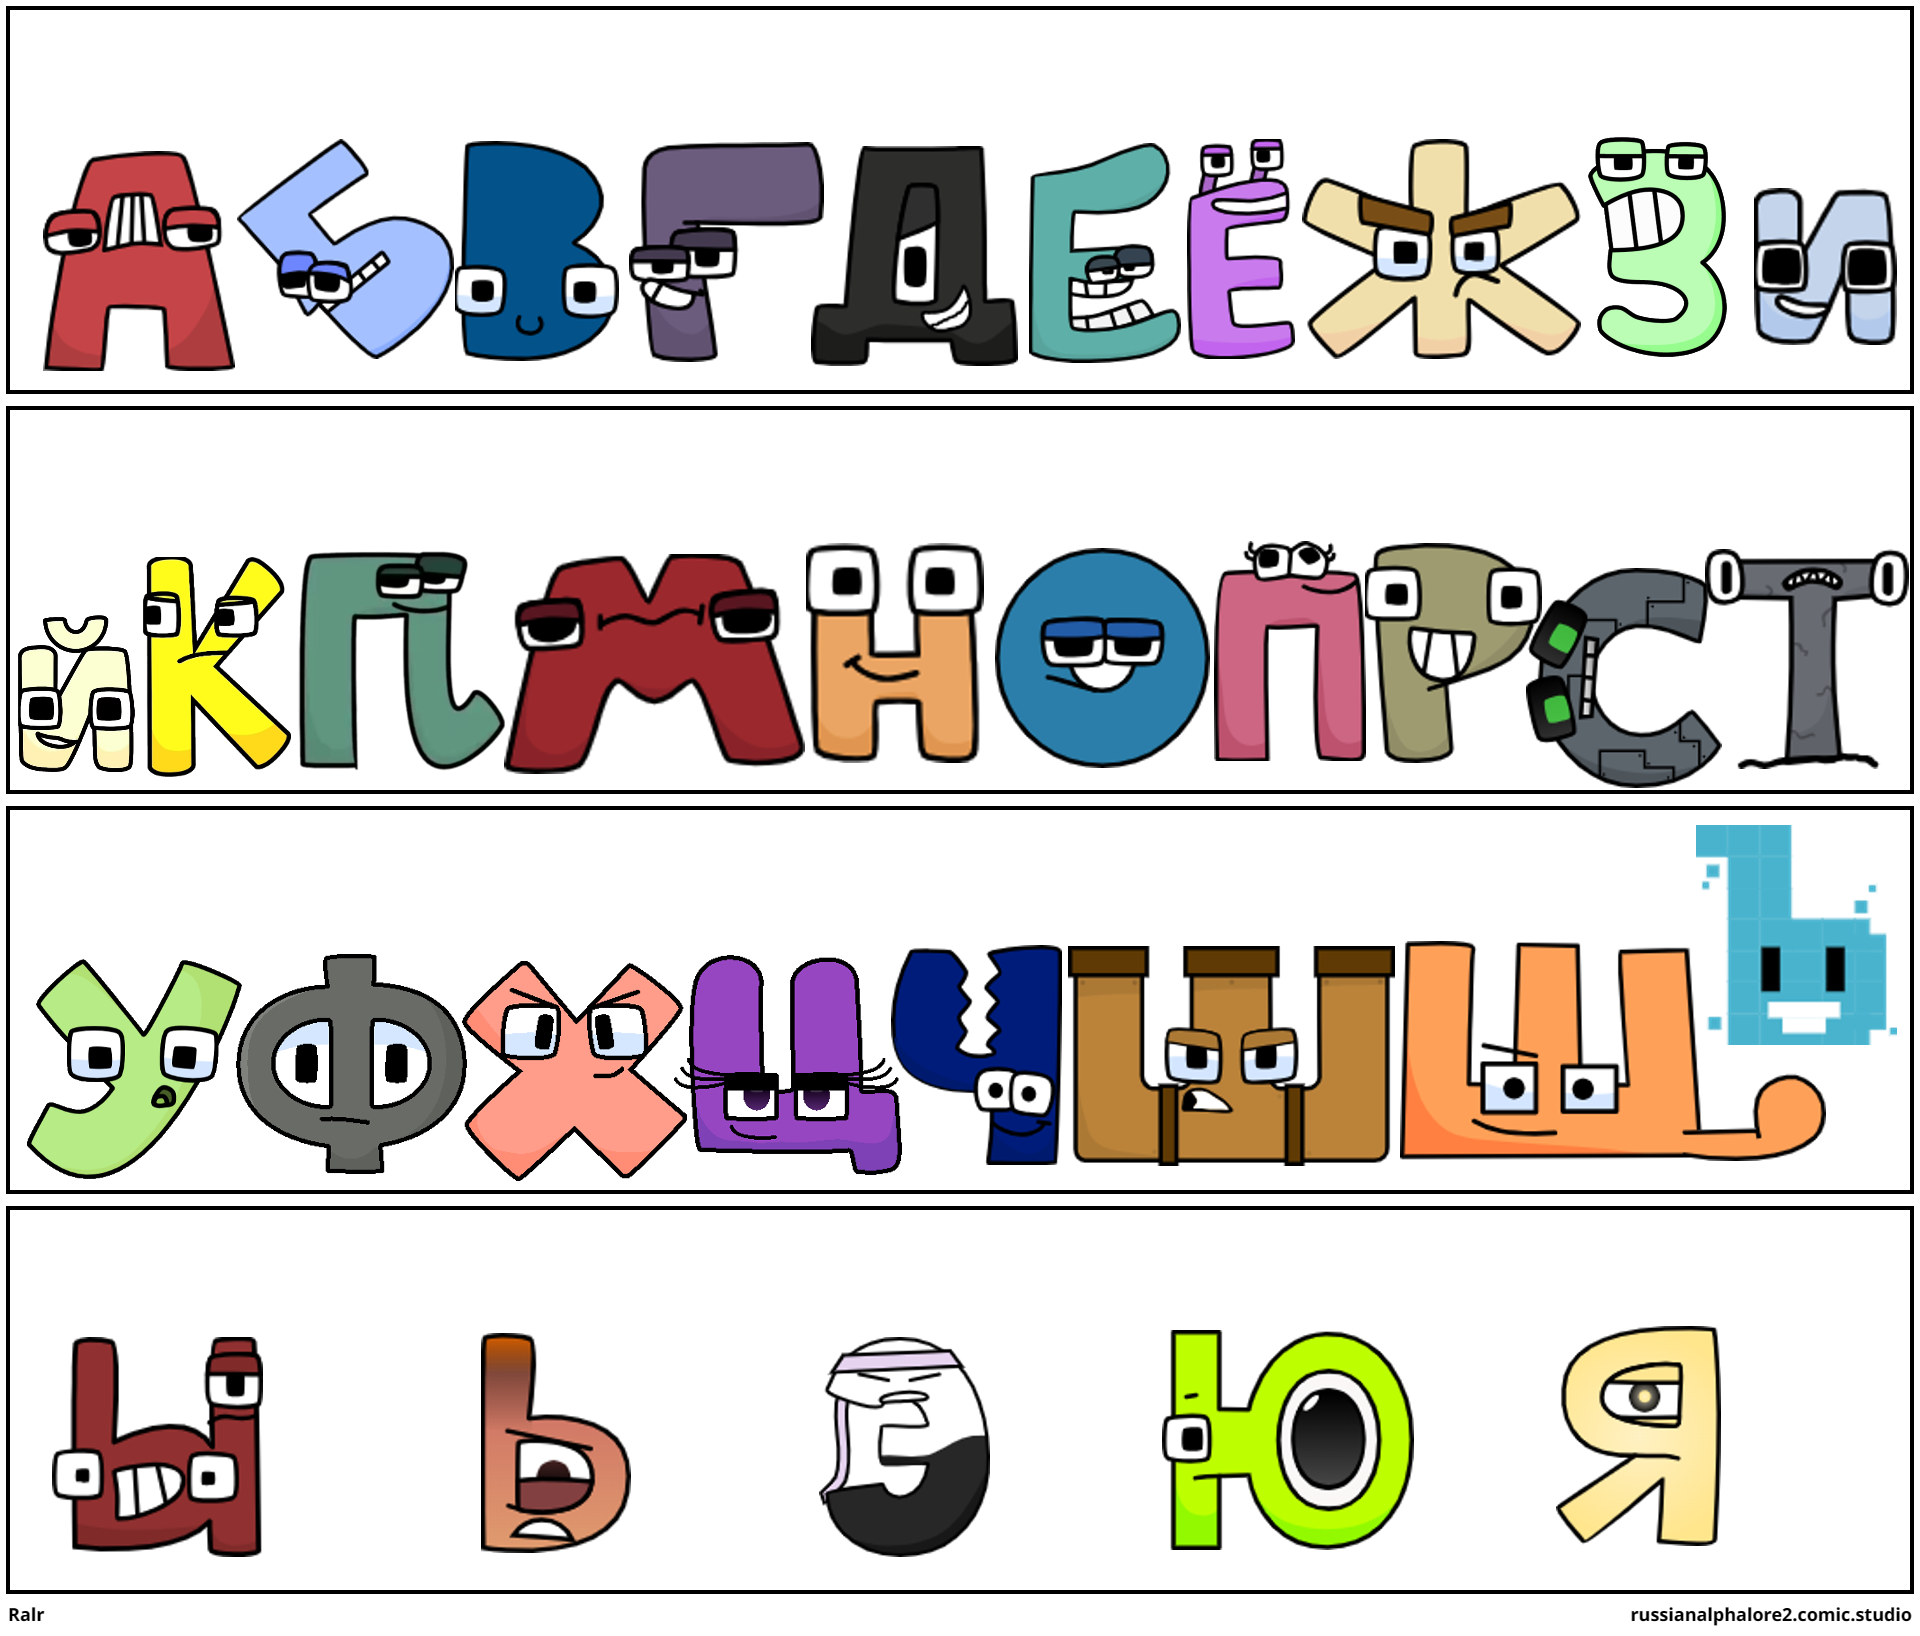 Kazakh Alphabet Lore (Part 1) - Comic Studio